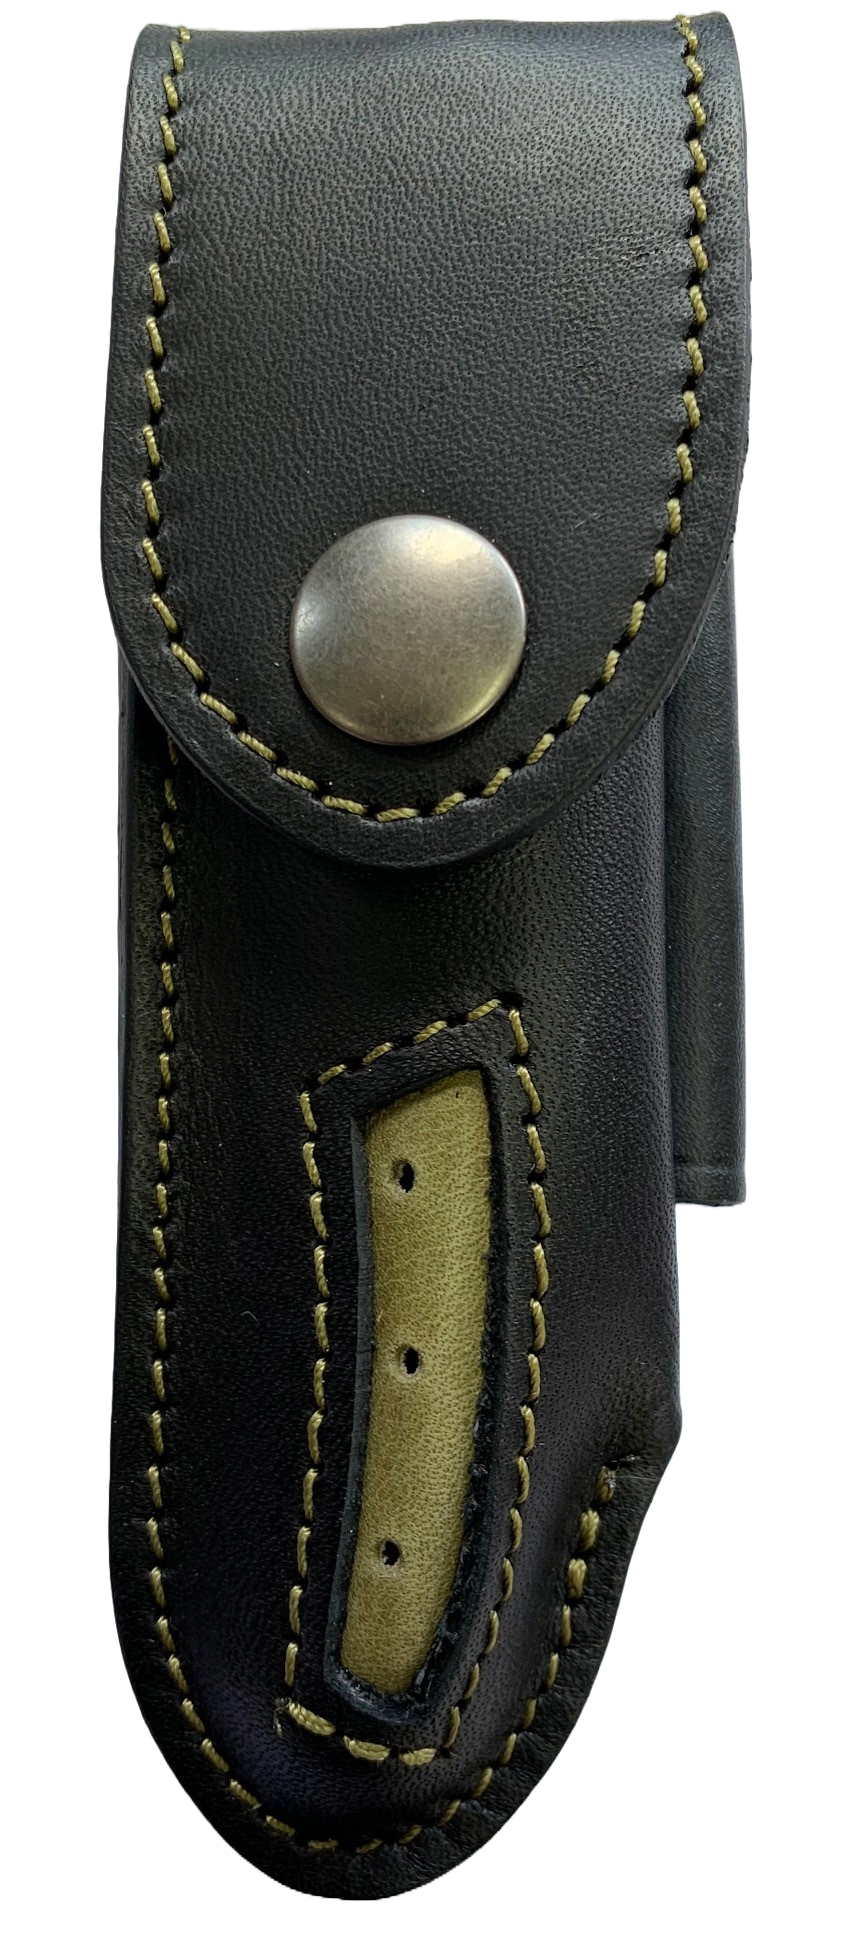 Leather Scabbard for Pocket Knives - Black